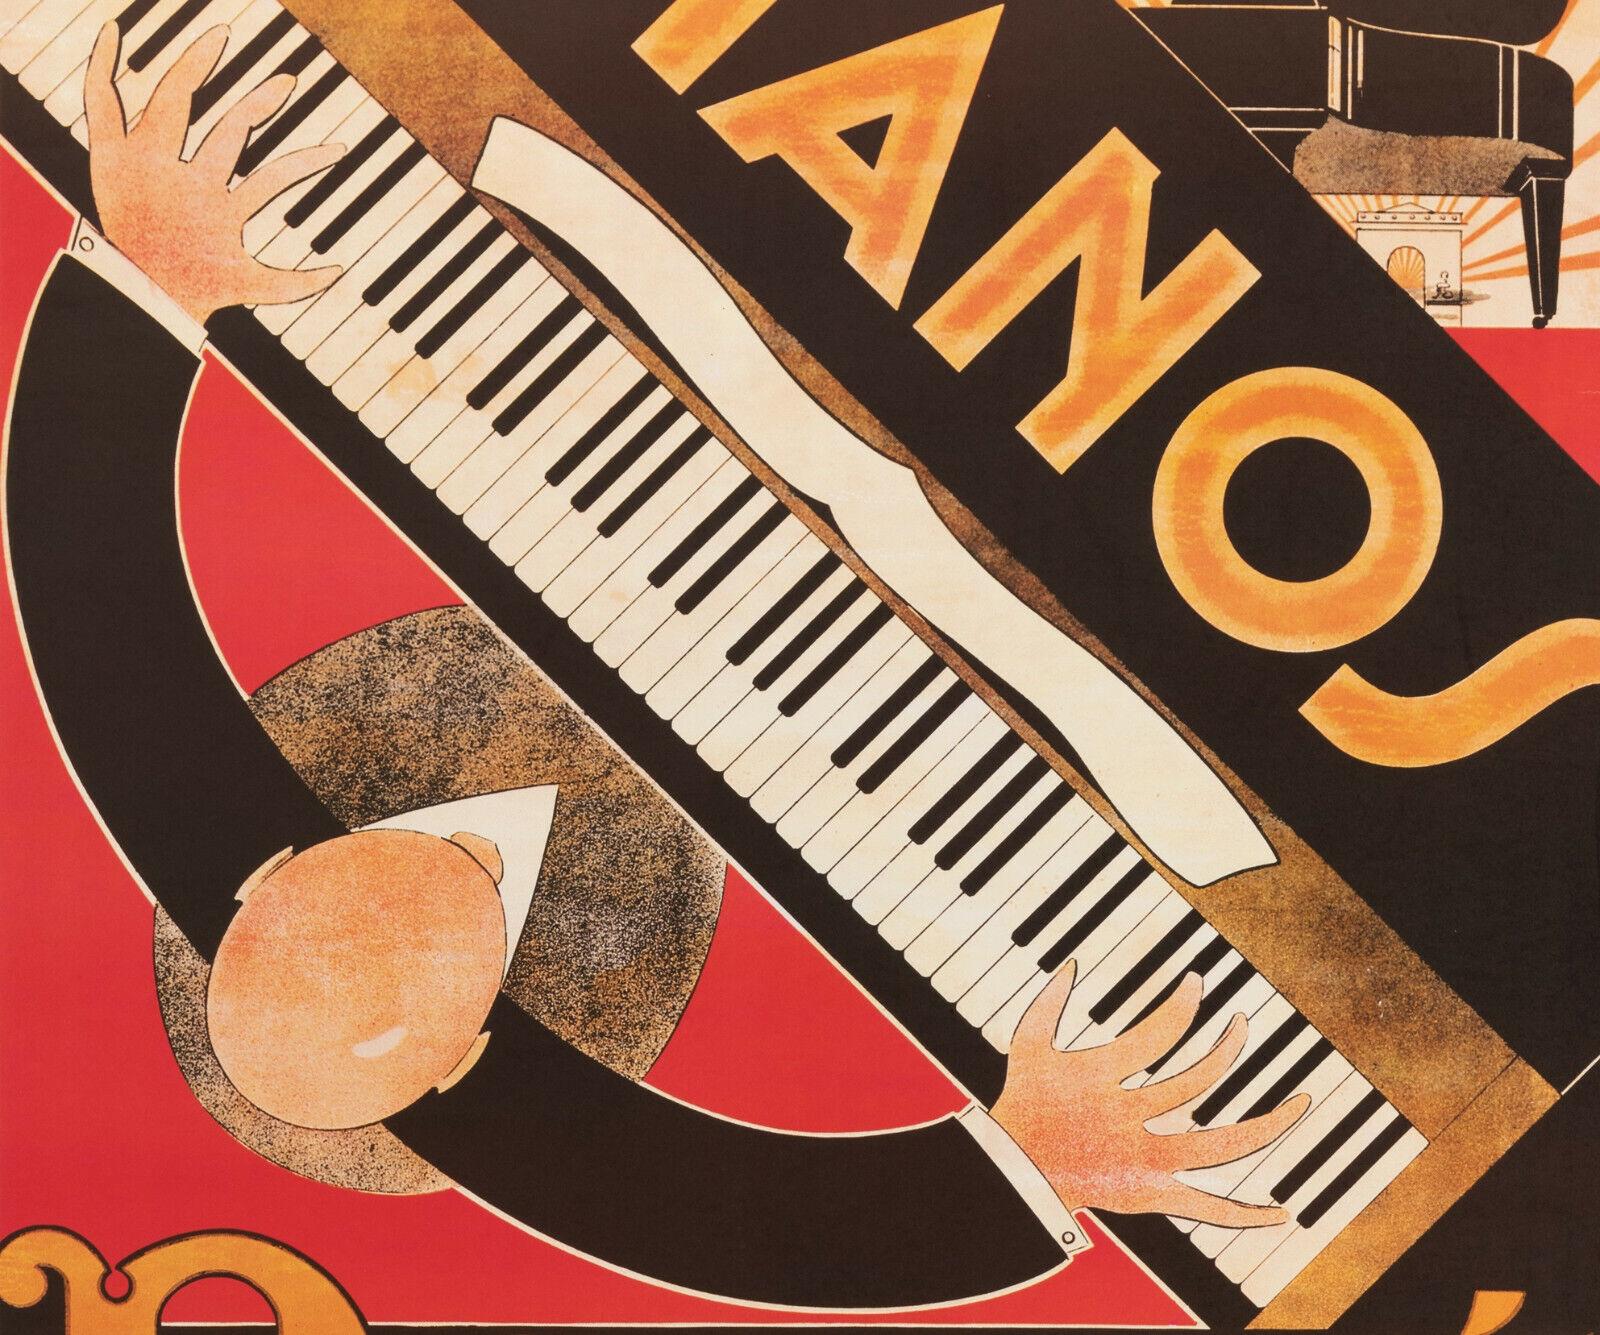 Original Vintage Poster-André Daudé-Piano Daudé-Music-Reissue, c.1980

Poster for Pianos Daudé, located at 75 Avenue de Wagram, 75017 Paris.
This poster is a modernized reprint (addition of telephone number,.. ) a poster made by André Daudé in 1926